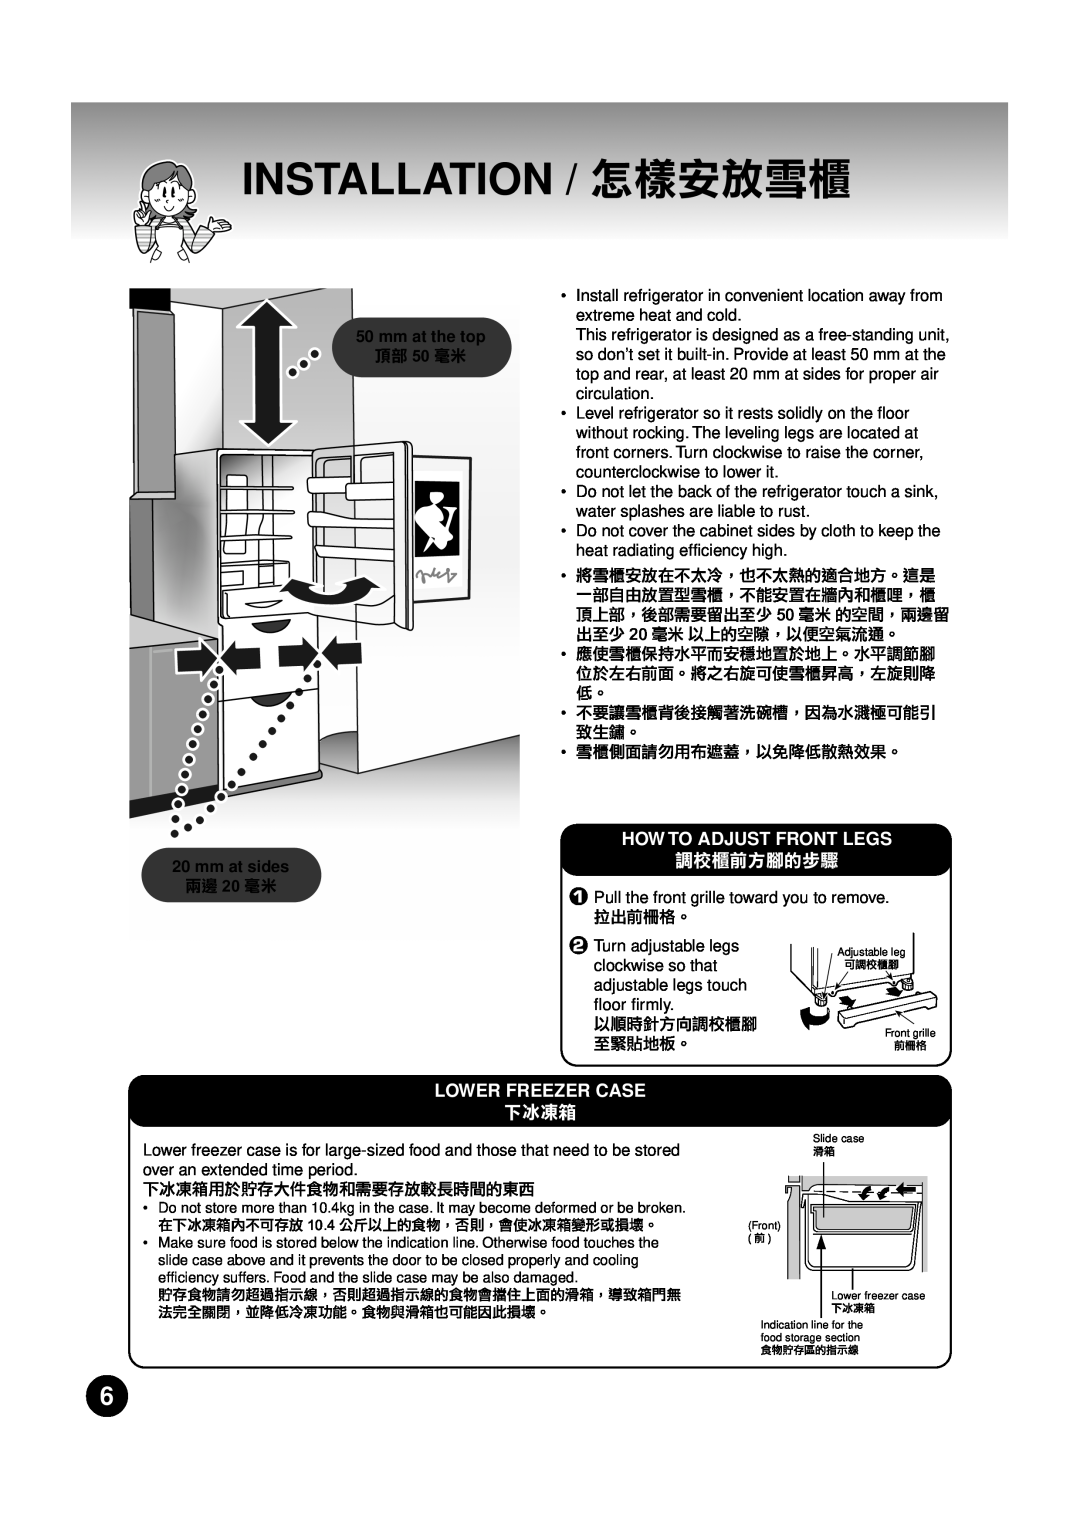 Hitachi R-26SVH Installation / 怎樣安放雪櫃, How To Adjust Front Legs, 調校櫃前方腳的步驟, Lower Freezer Case, 下冰凍箱, mm at the top 